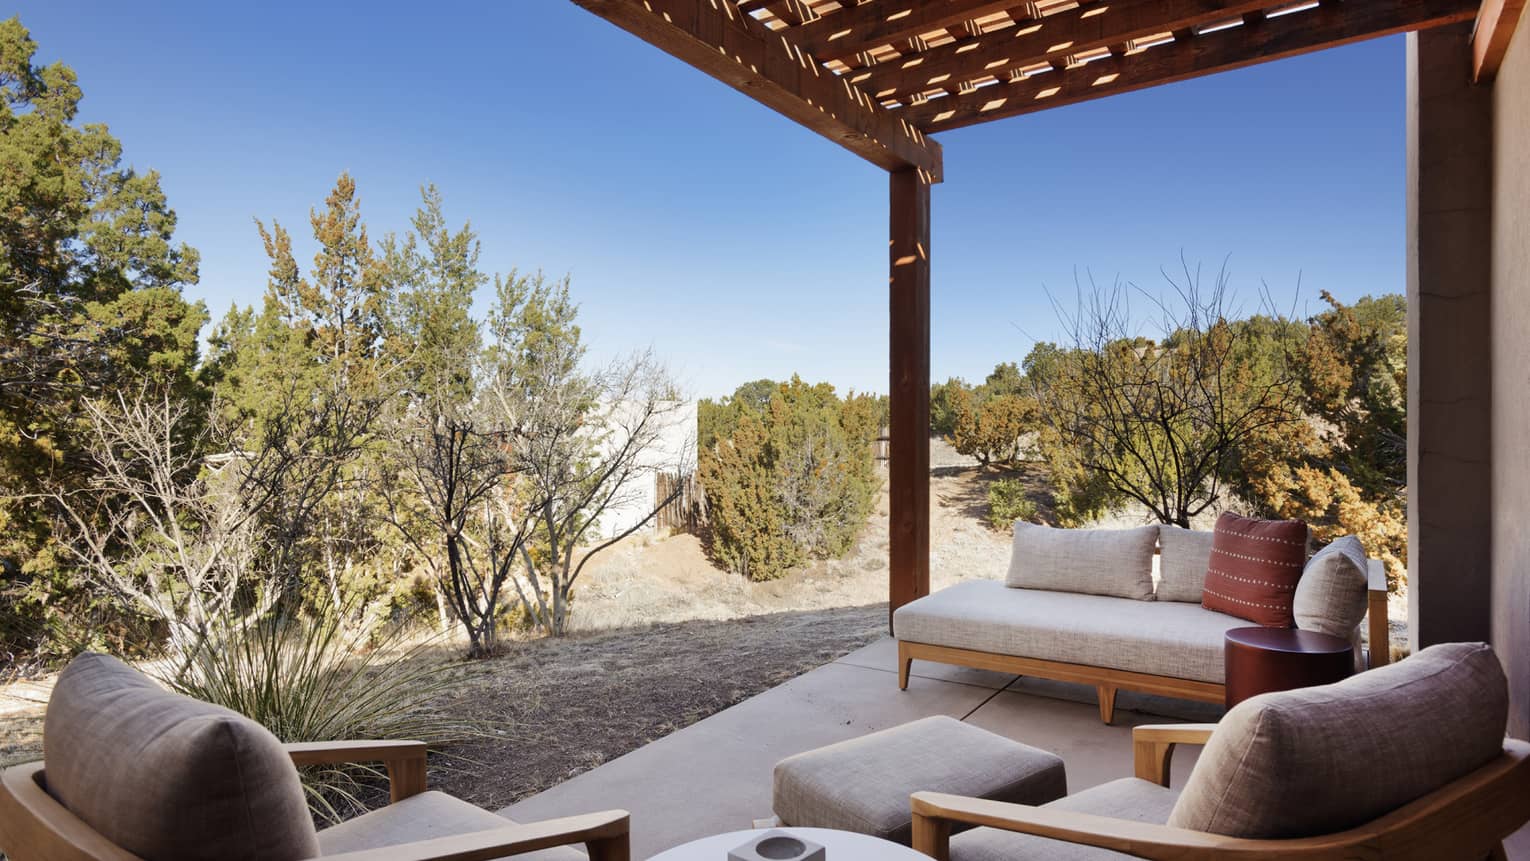 Furnished terrace under pergola, guest room at Four Seasons Resort Santa Fe